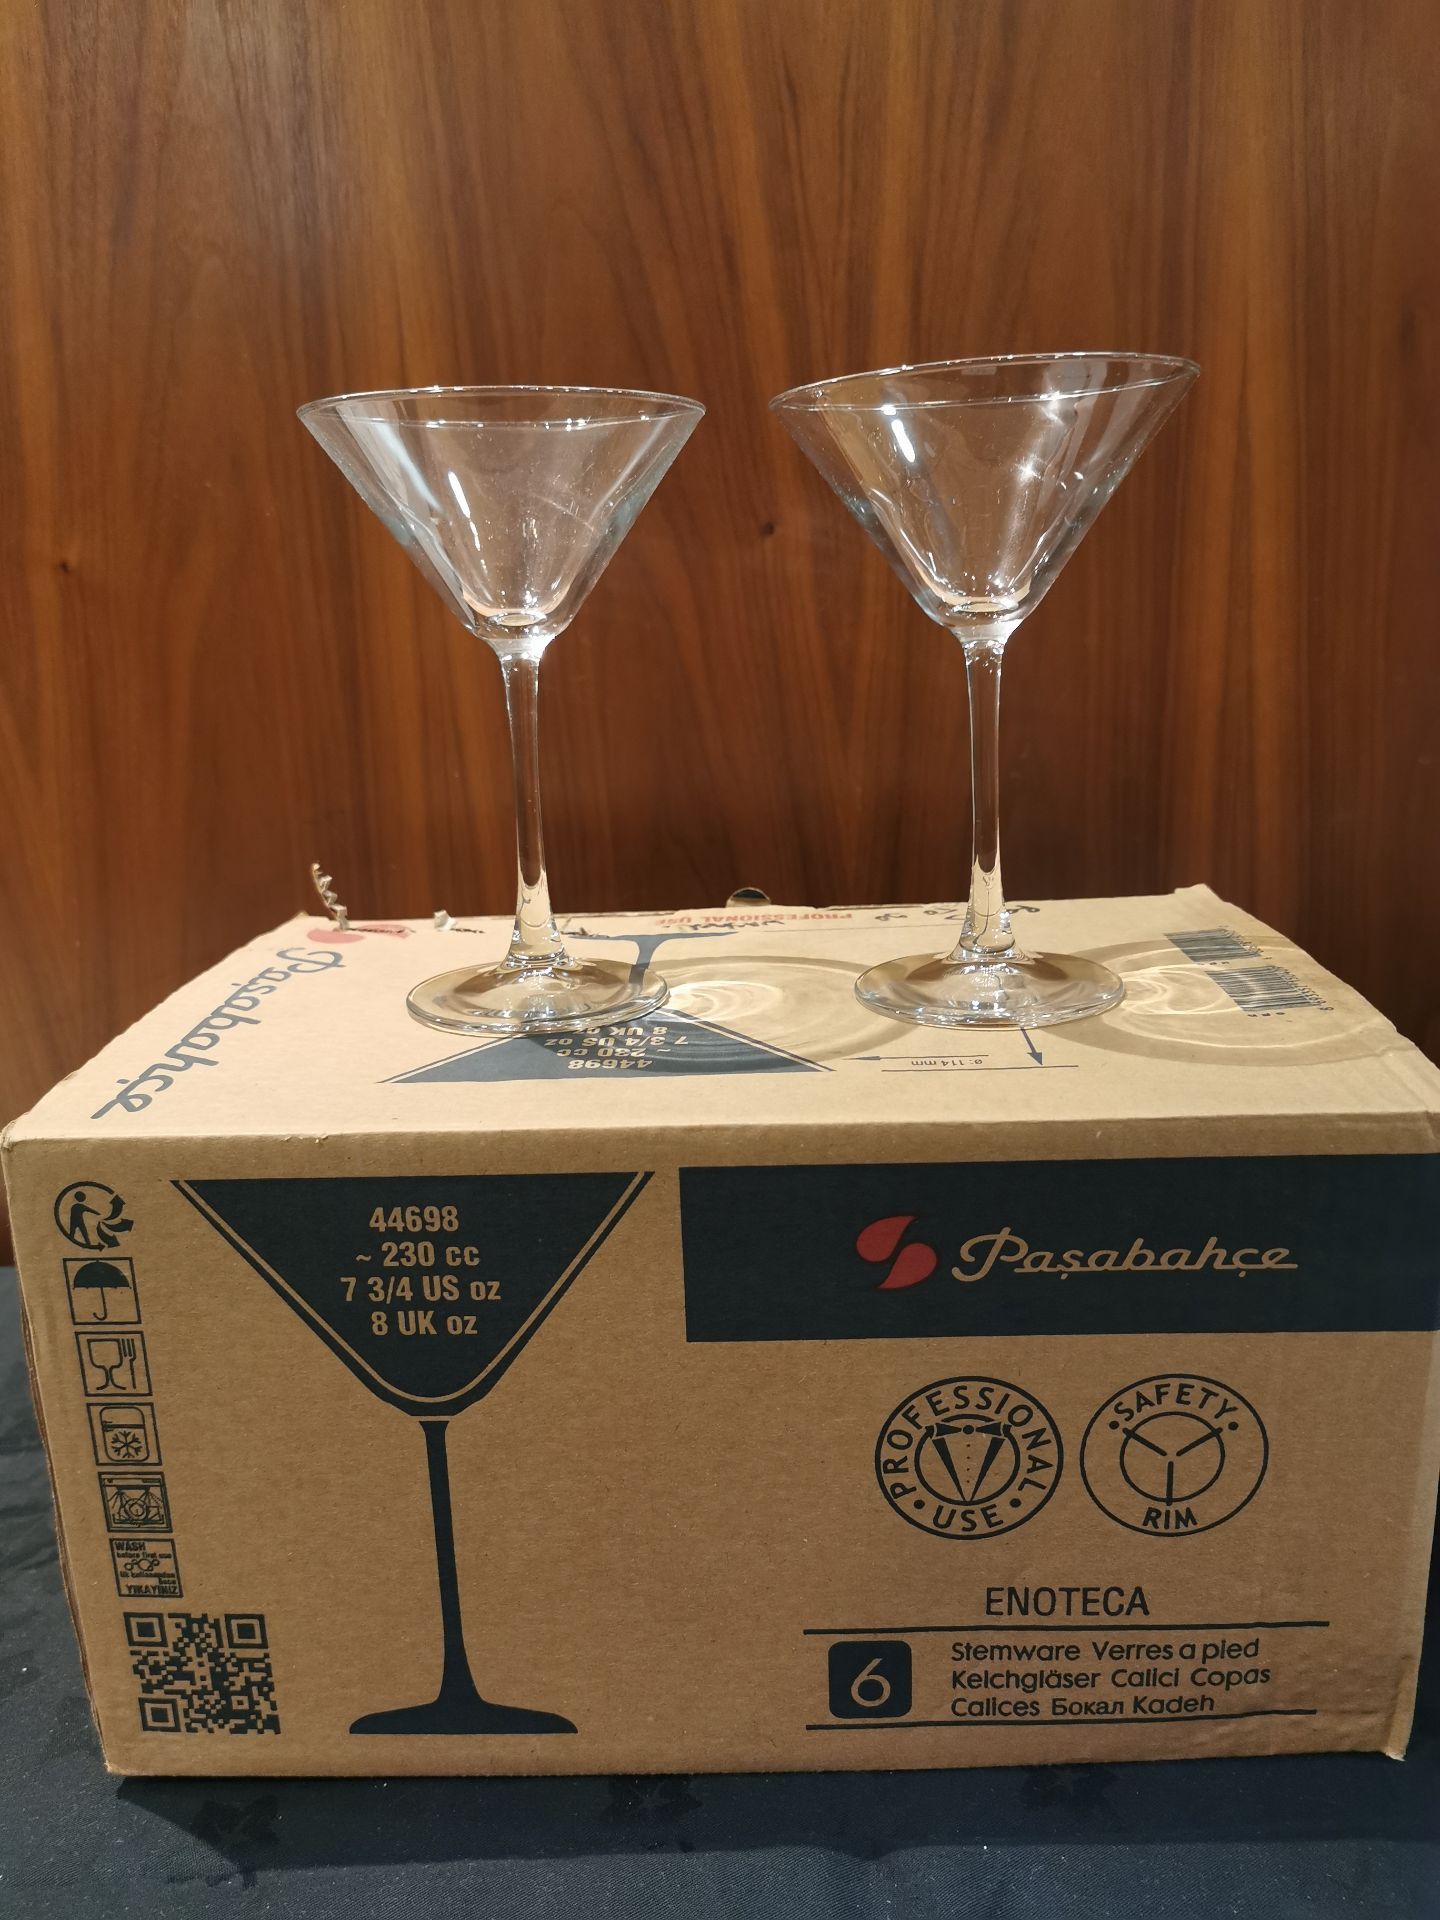 6 x Pasabahce 8oz cocktails glasses boxed